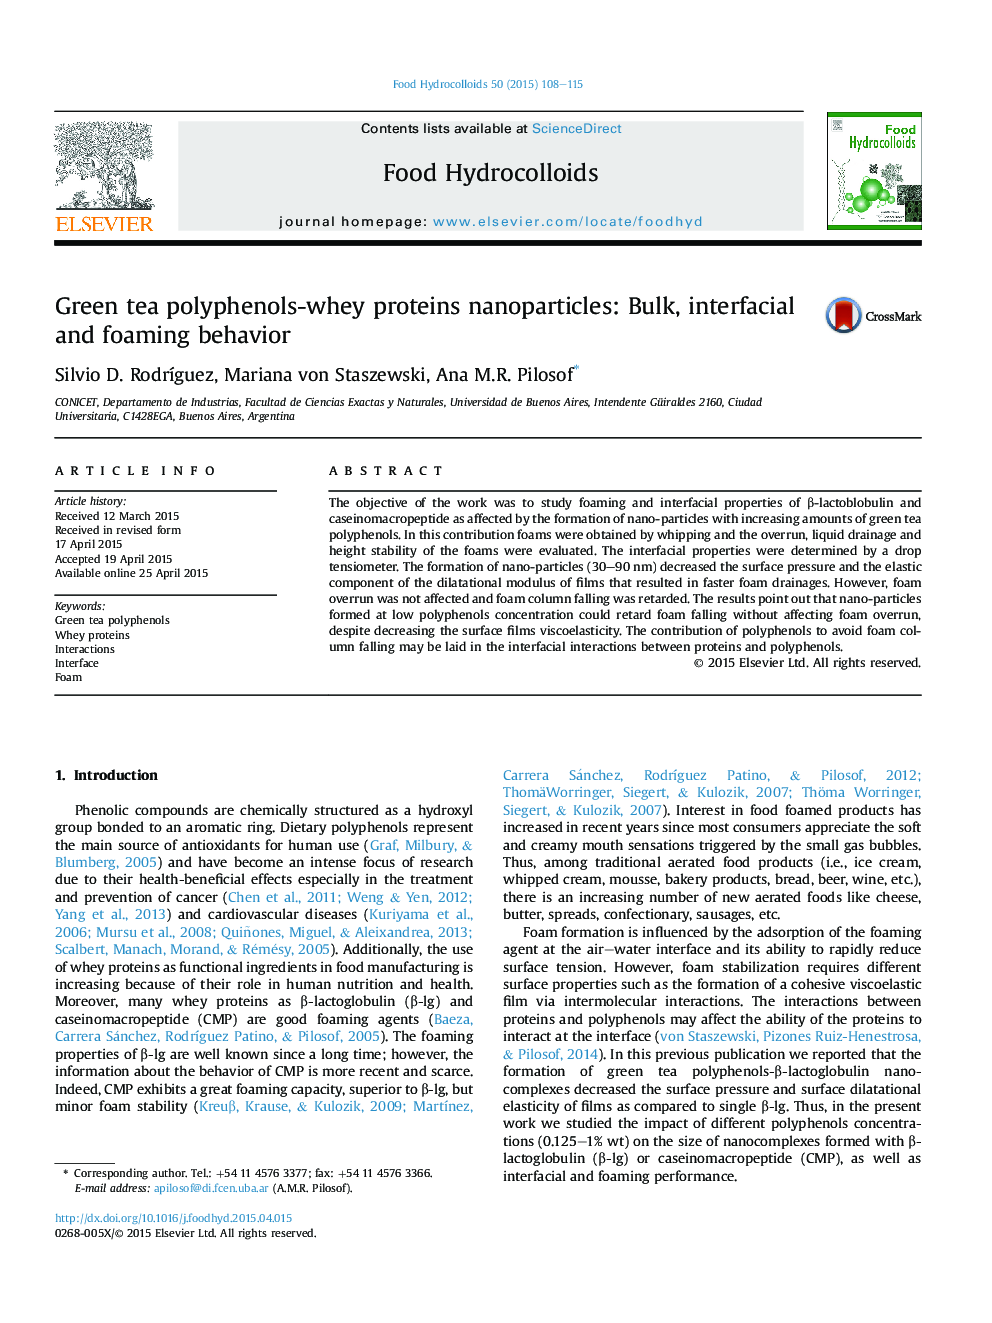 Green tea polyphenols-whey proteins nanoparticles: Bulk, interfacial and foaming behavior